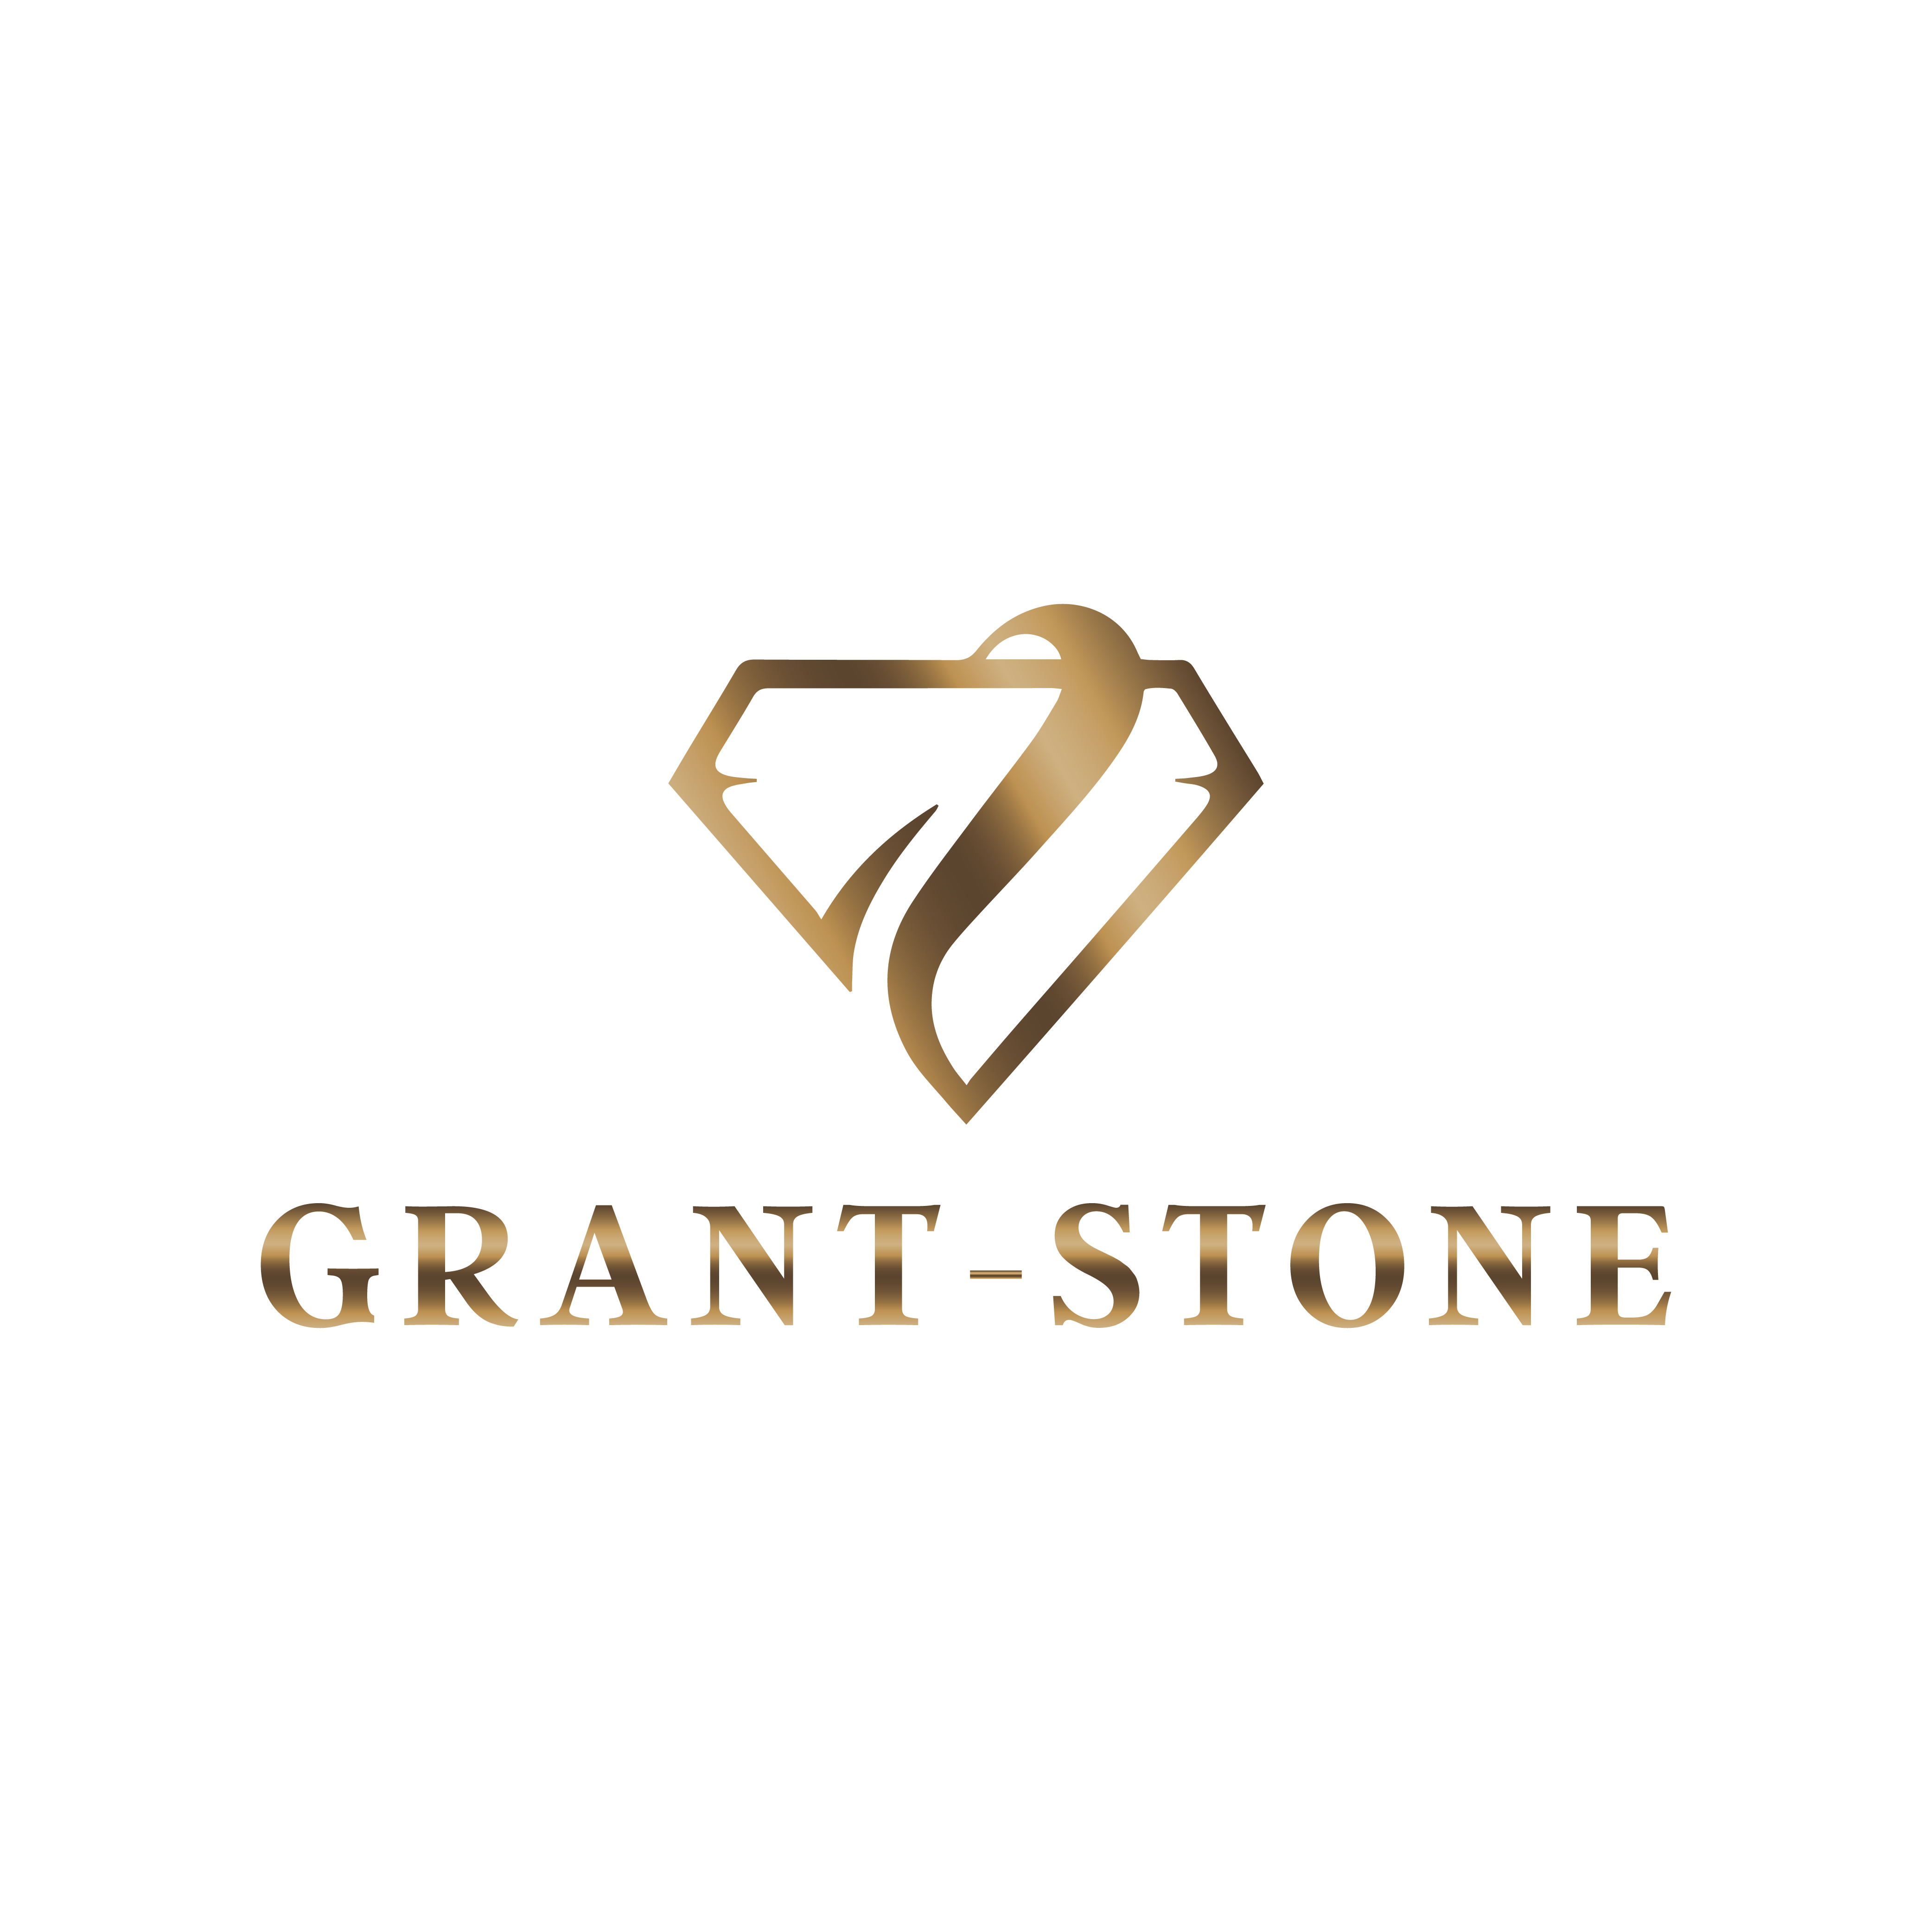 Grant-Stone